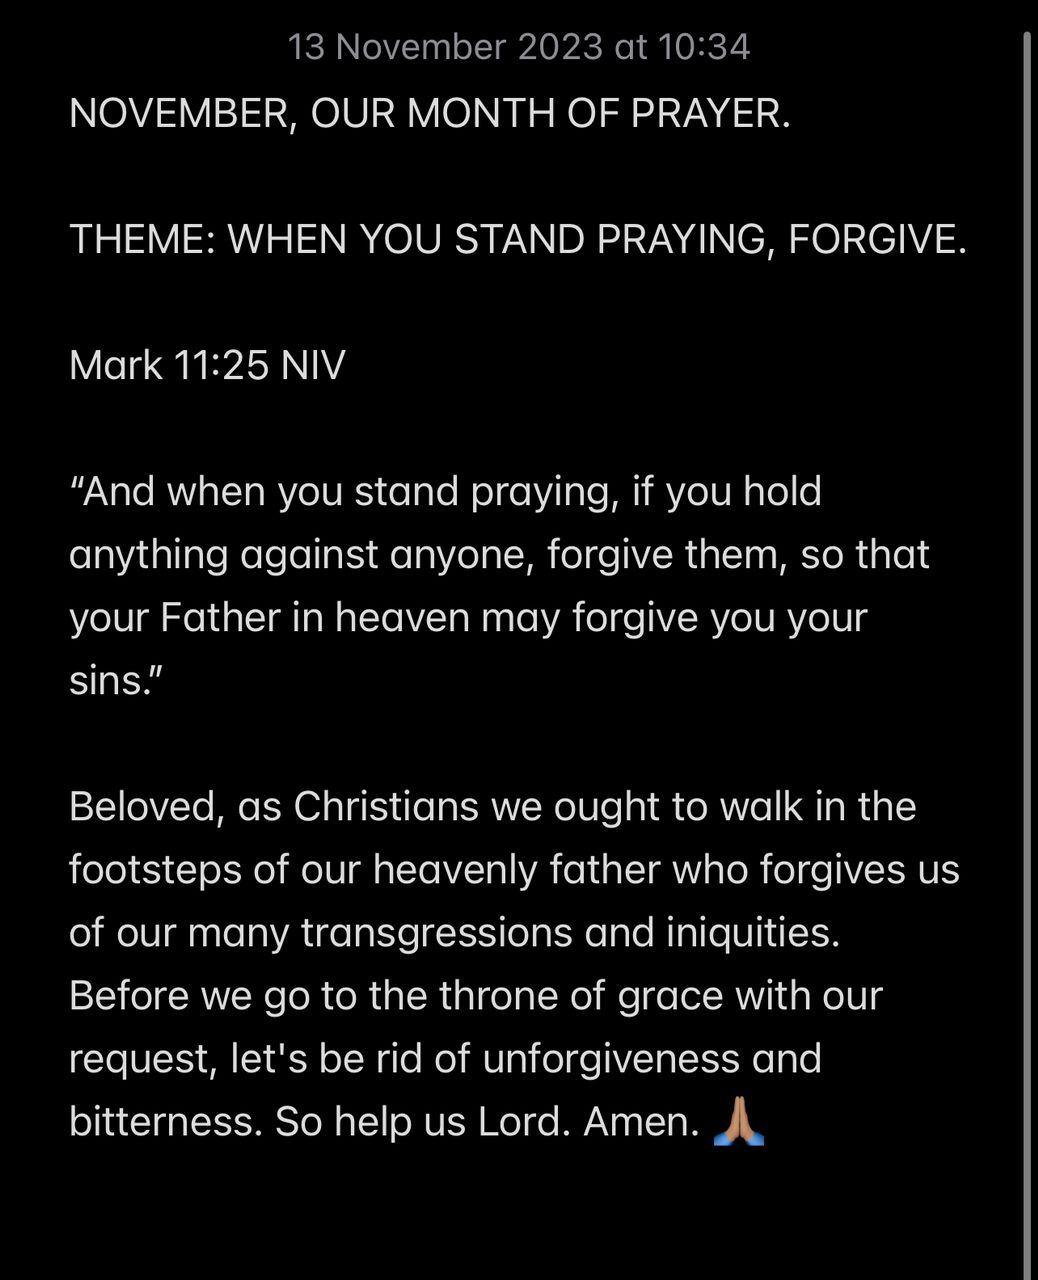 WHEN YOU STAND PRAYING, FORGIVE.